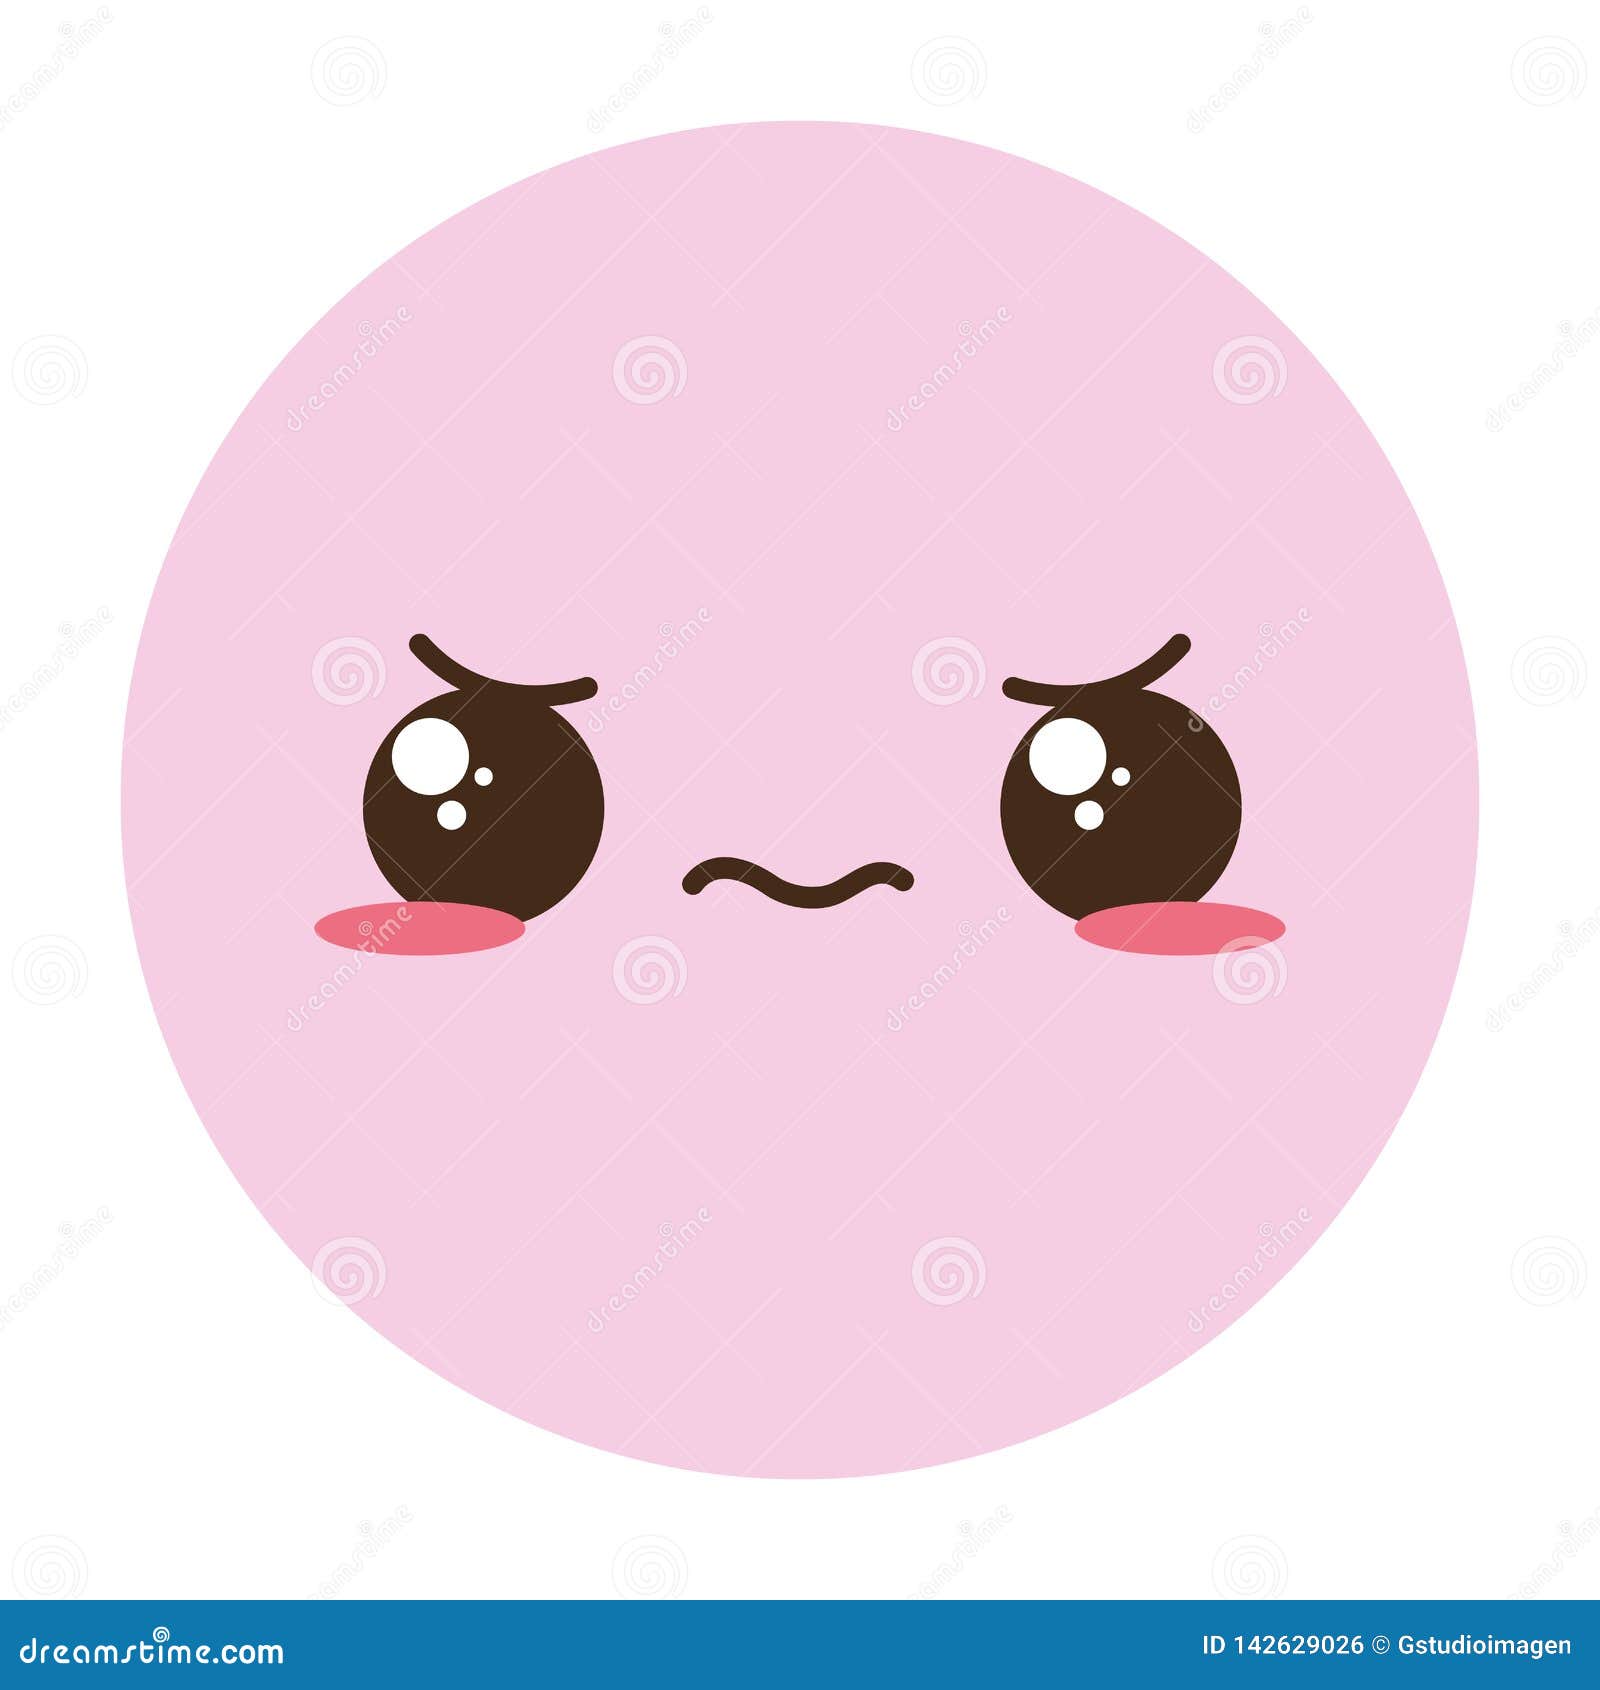 Kawaii emoji cartoon face stock vector. Illustration of cartoon - 142629026